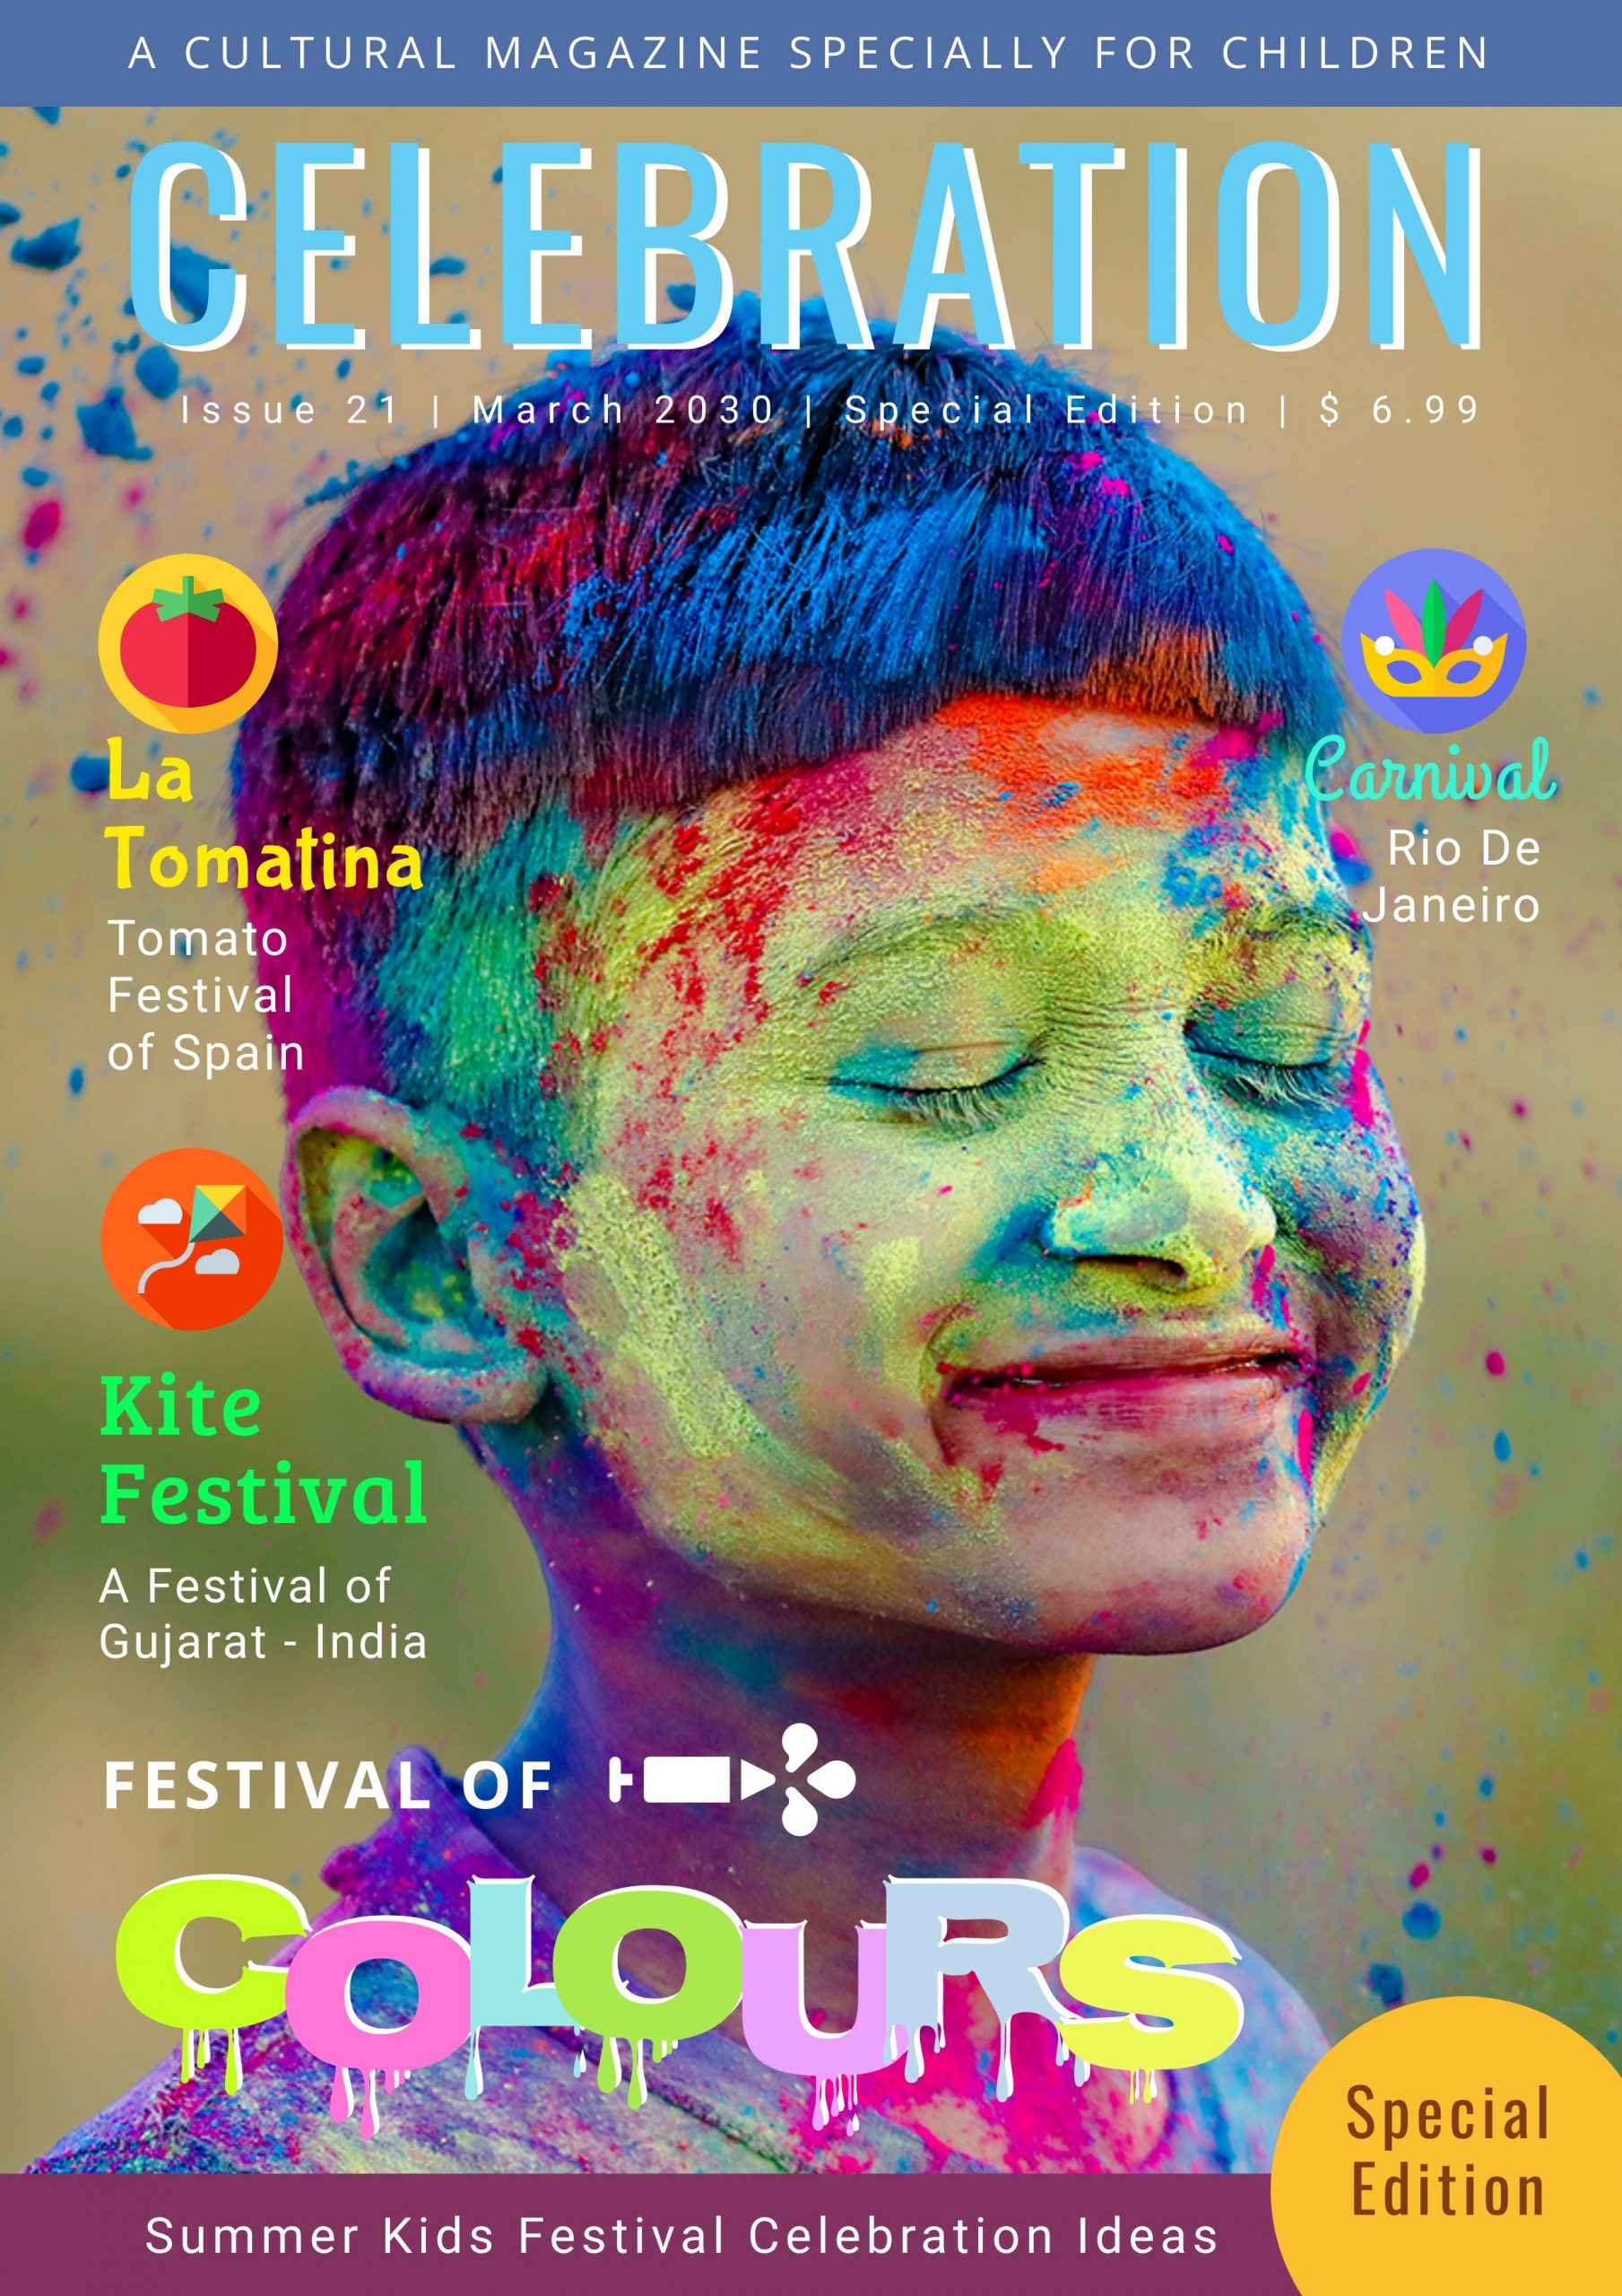 Kids Magazine Cover Template